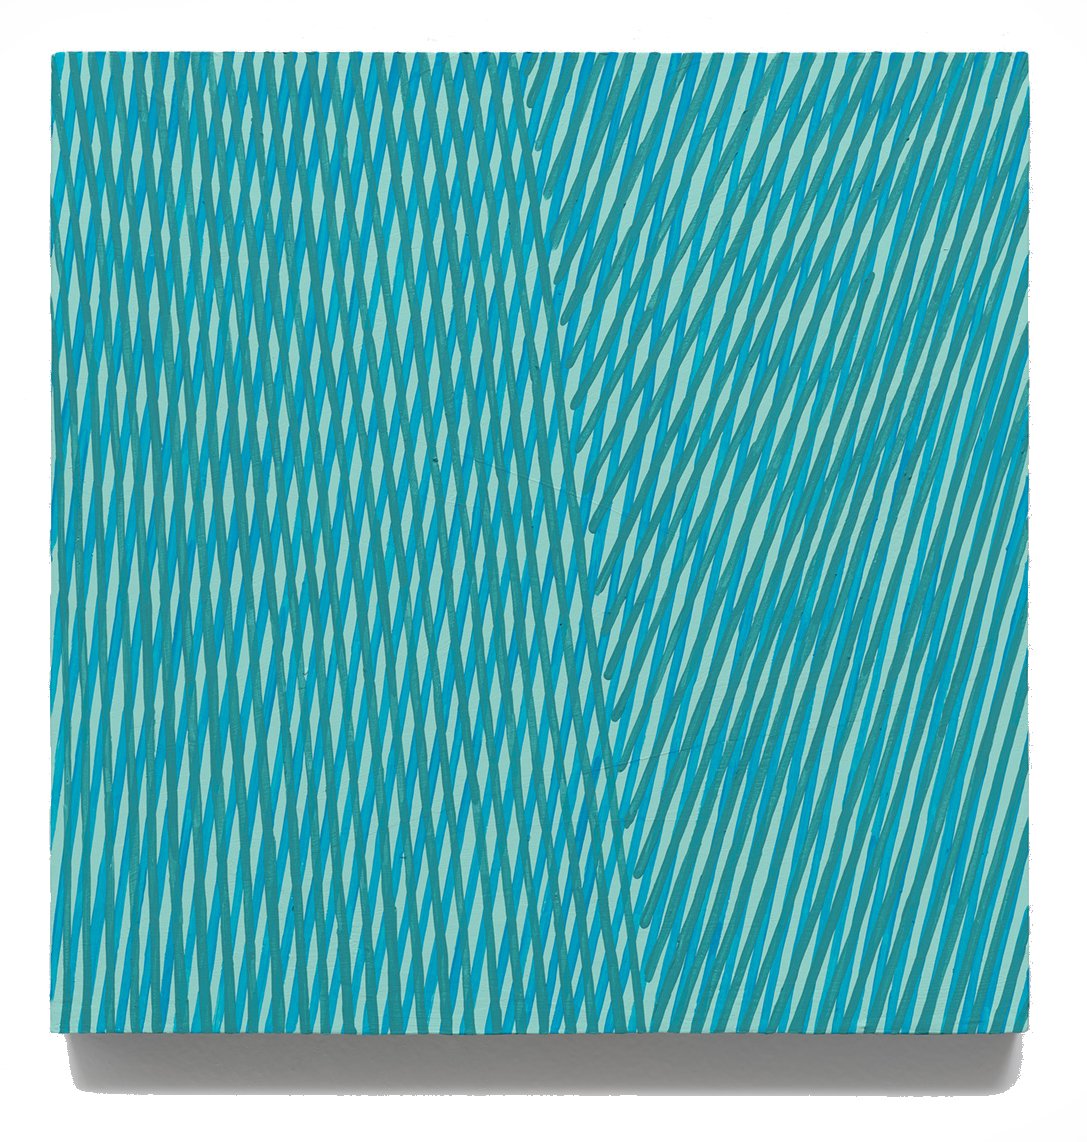 MEL PREST | Sea Maraca, 12 x 12 x 2 inches / 30.5 x 30.5 x 5 cm, acrylic on wood panel, 2023